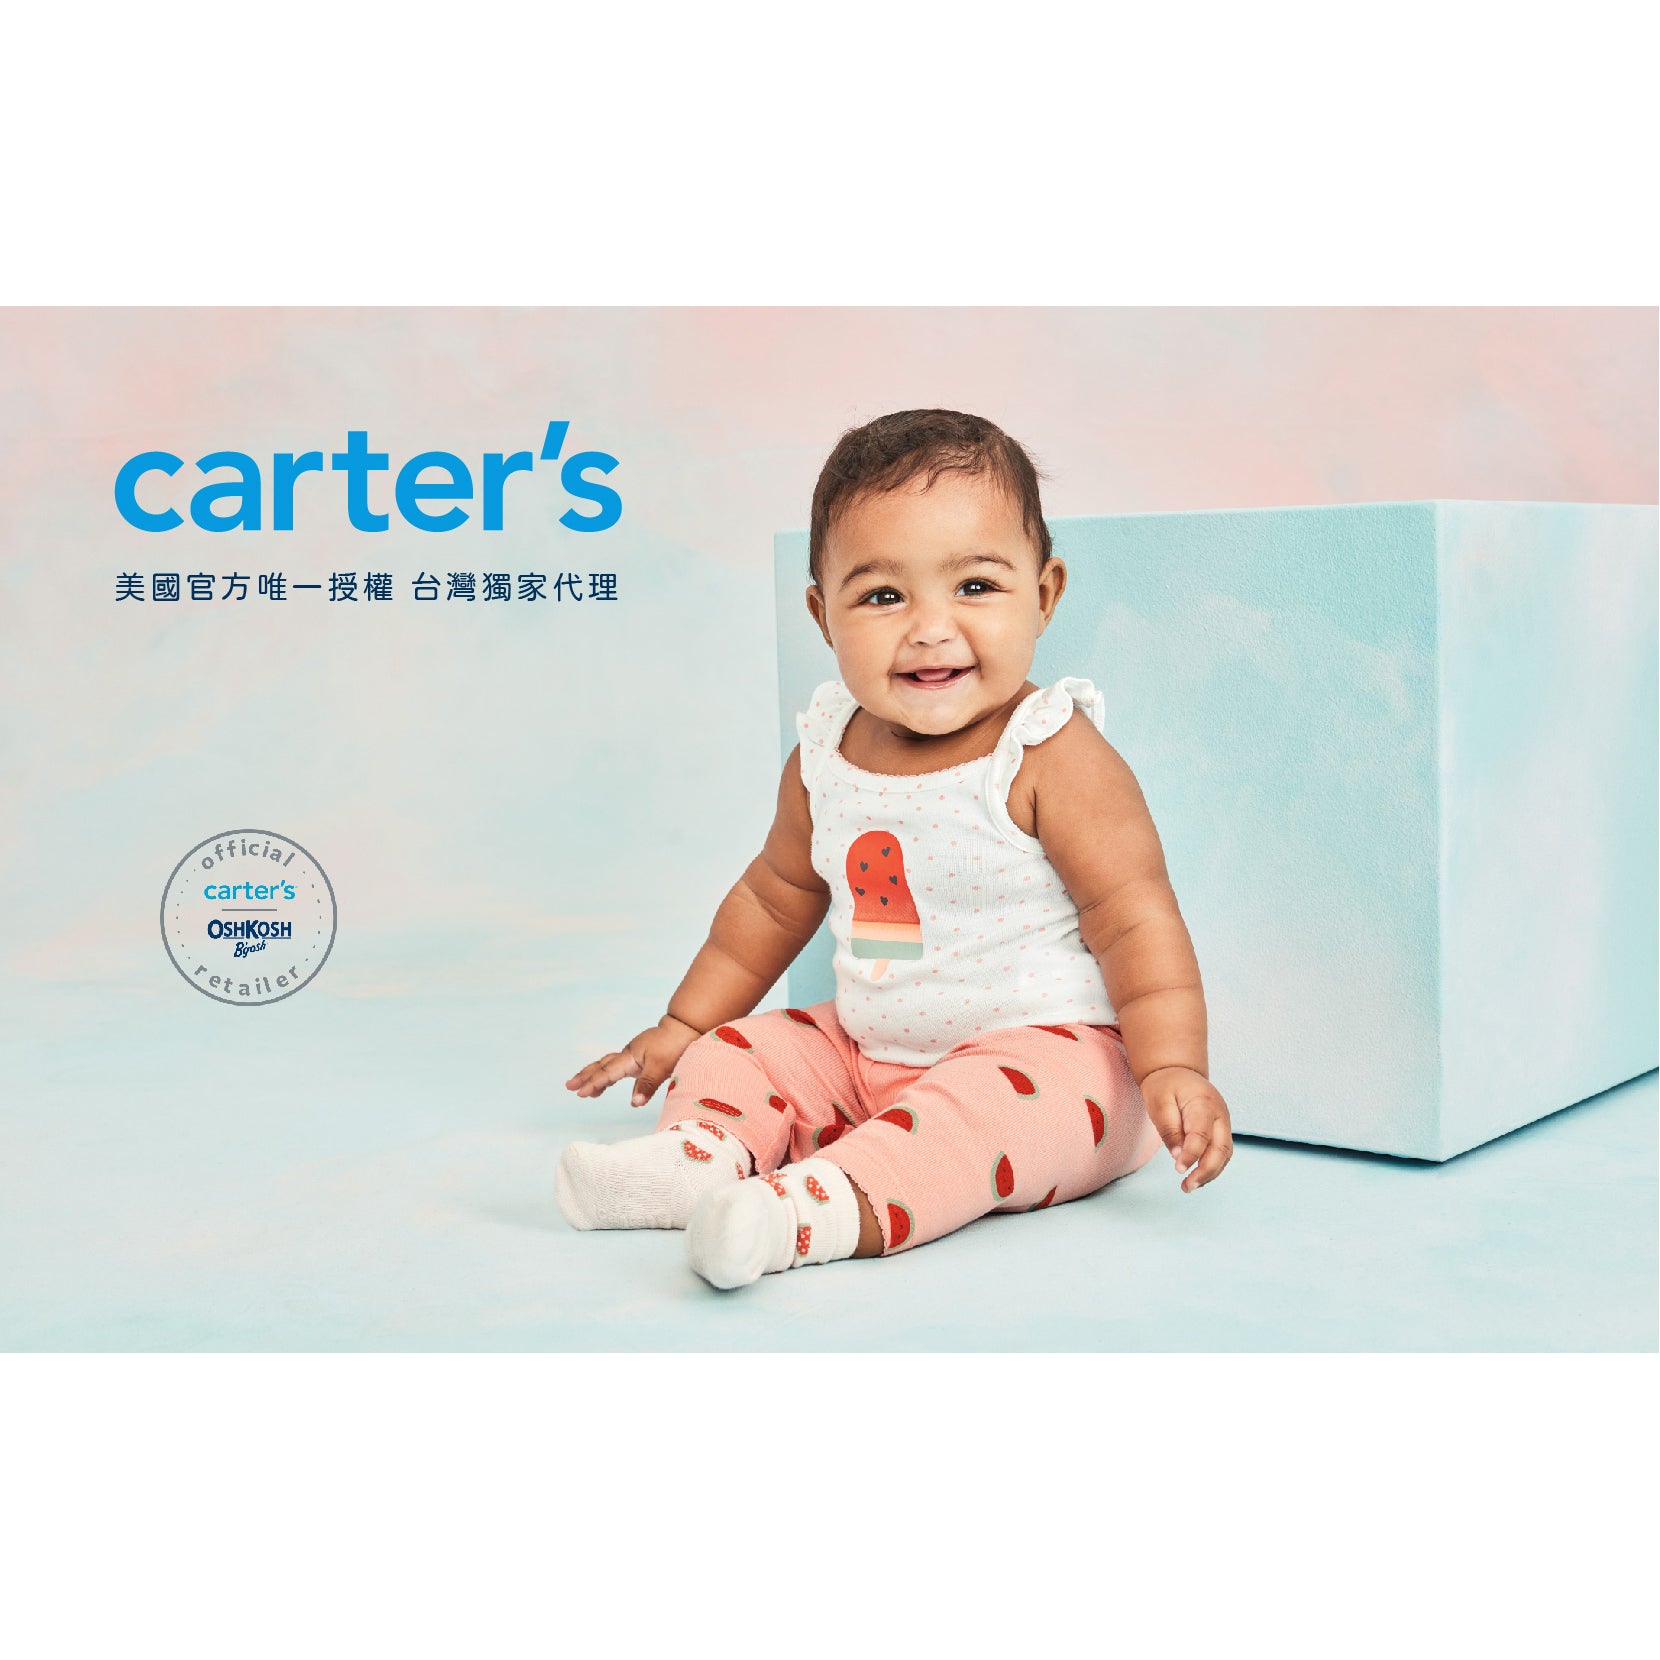 Carter's I love you top (6M-24M) – Carter's｜Oshkosh 美國經典童裝